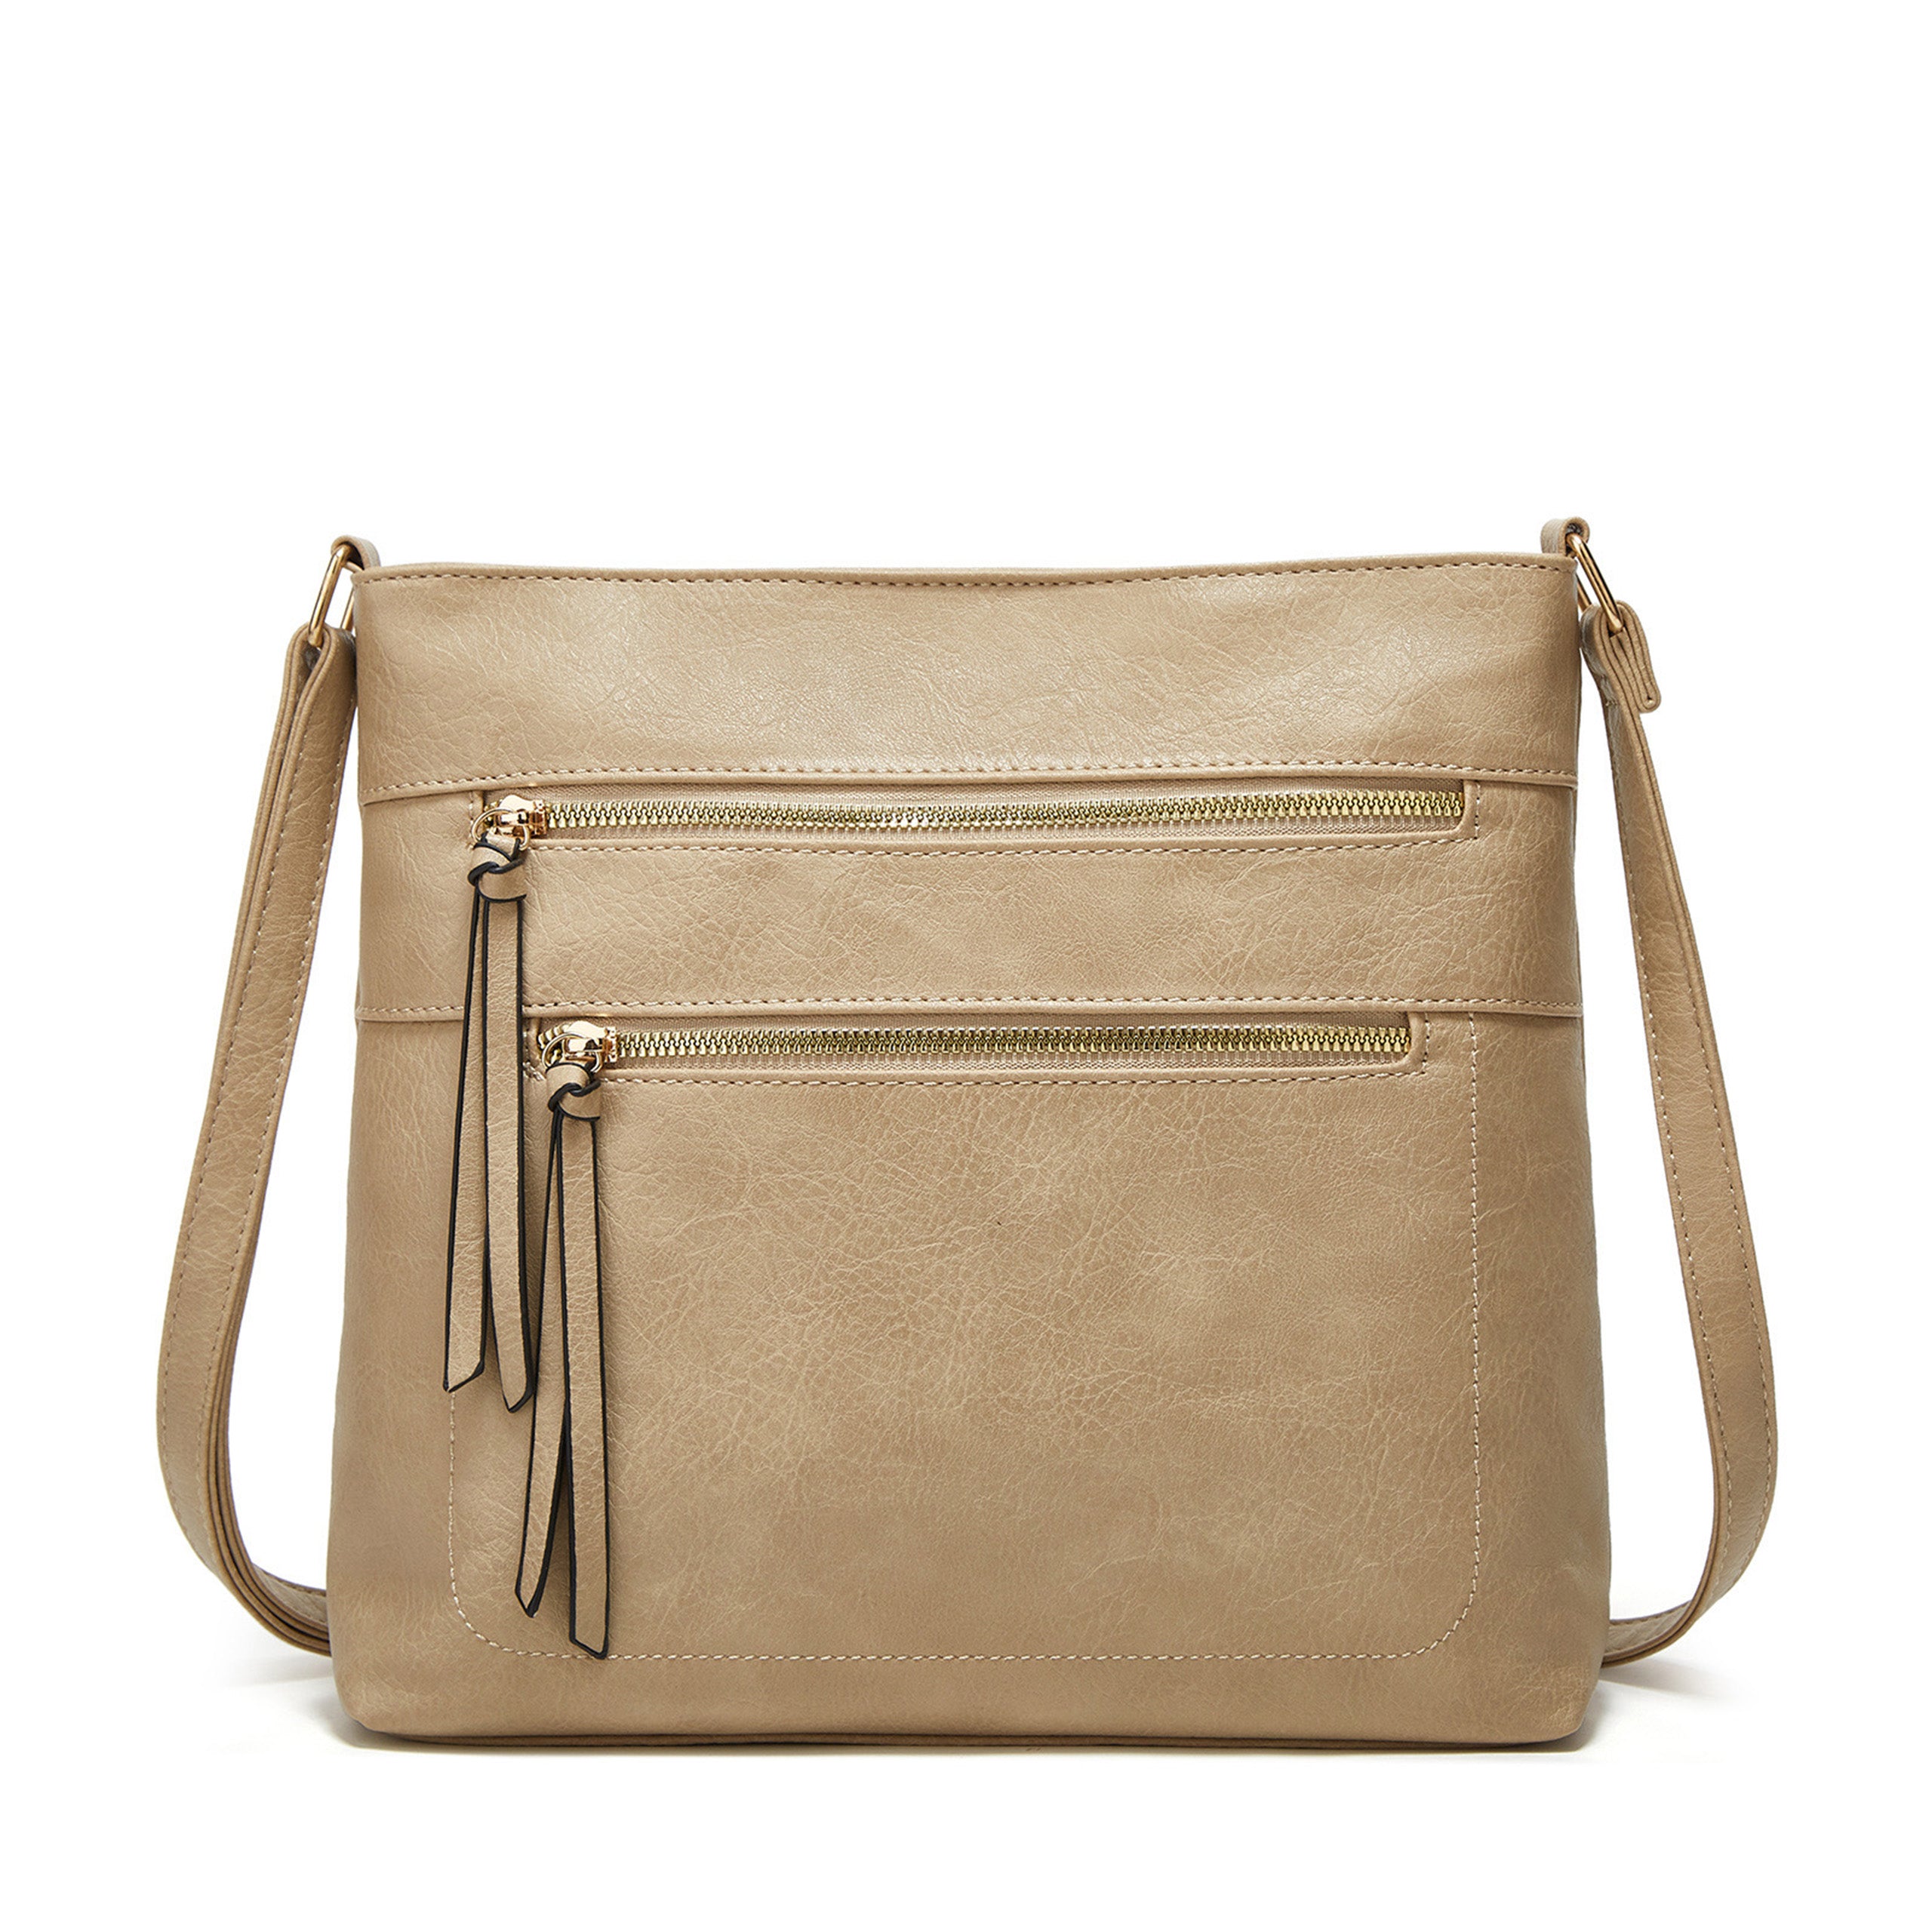 Crossbody Purses for Women,Multi-Zipper Pocket Women's Shoulder Handbags with Adjustable Strap